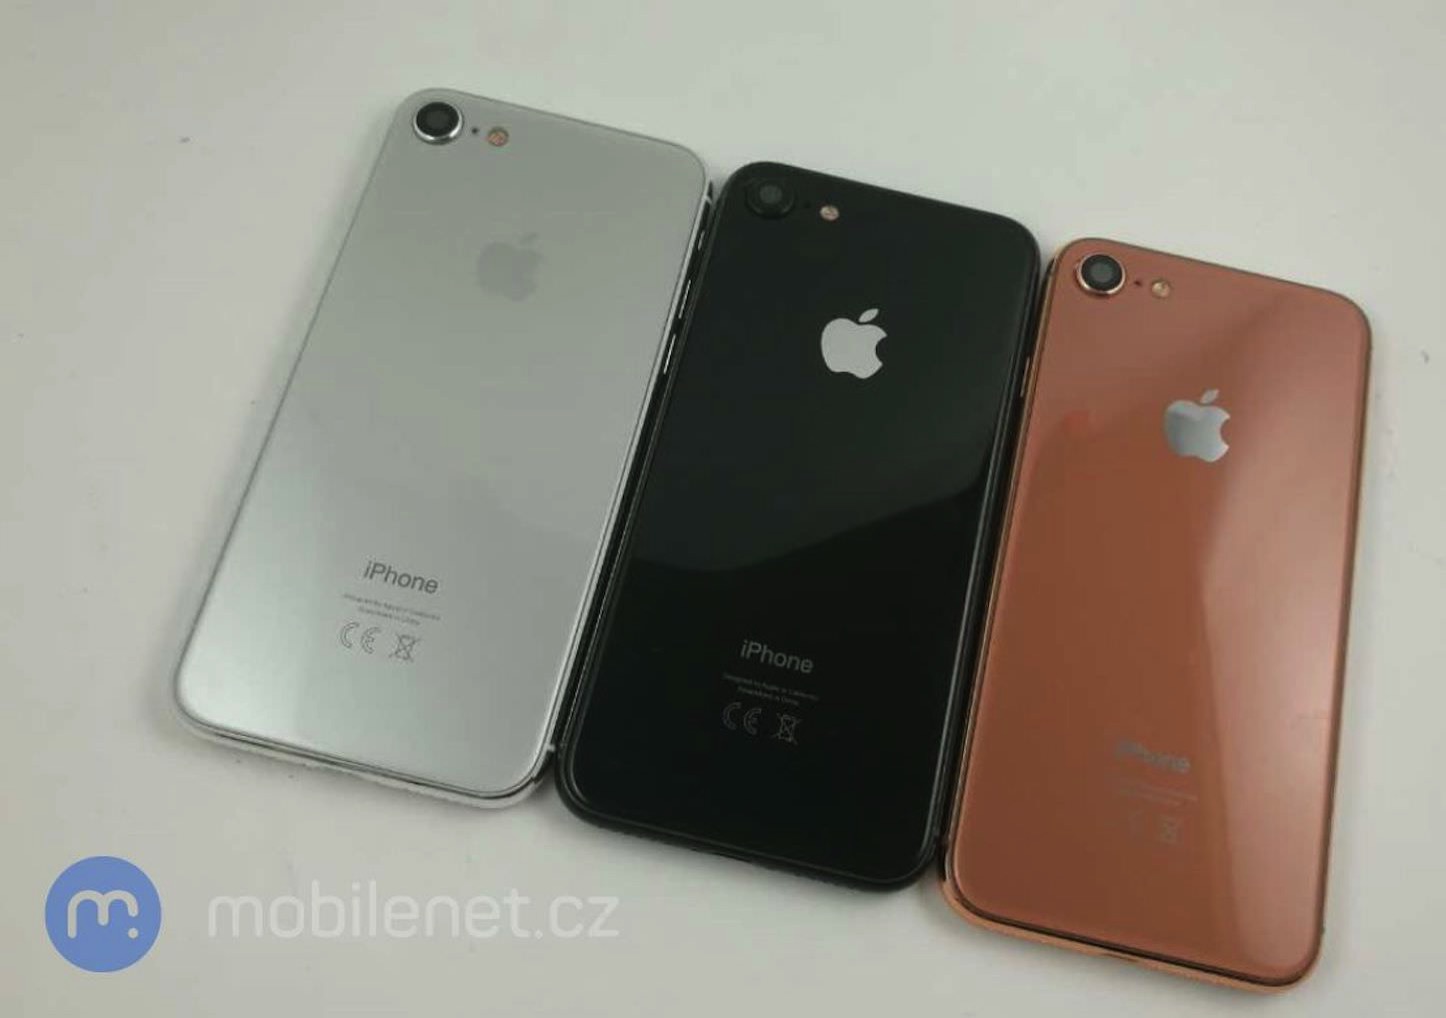 iphone-7s-in-copper-gold.jpeg